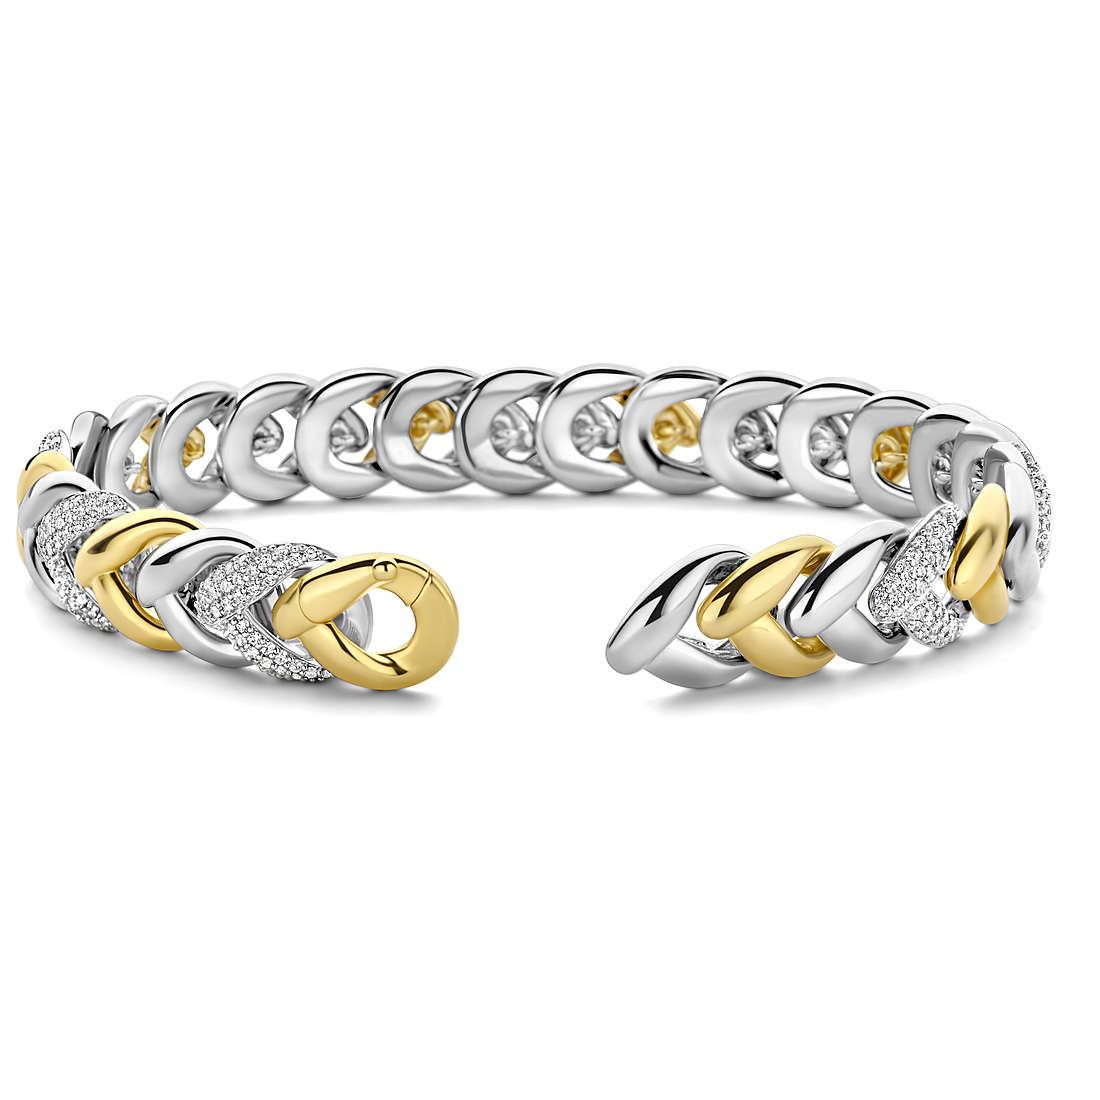 TI SENTO MILANO bracelet woman Bracelet with 925 Silver Chain jewel 2993ZY/L